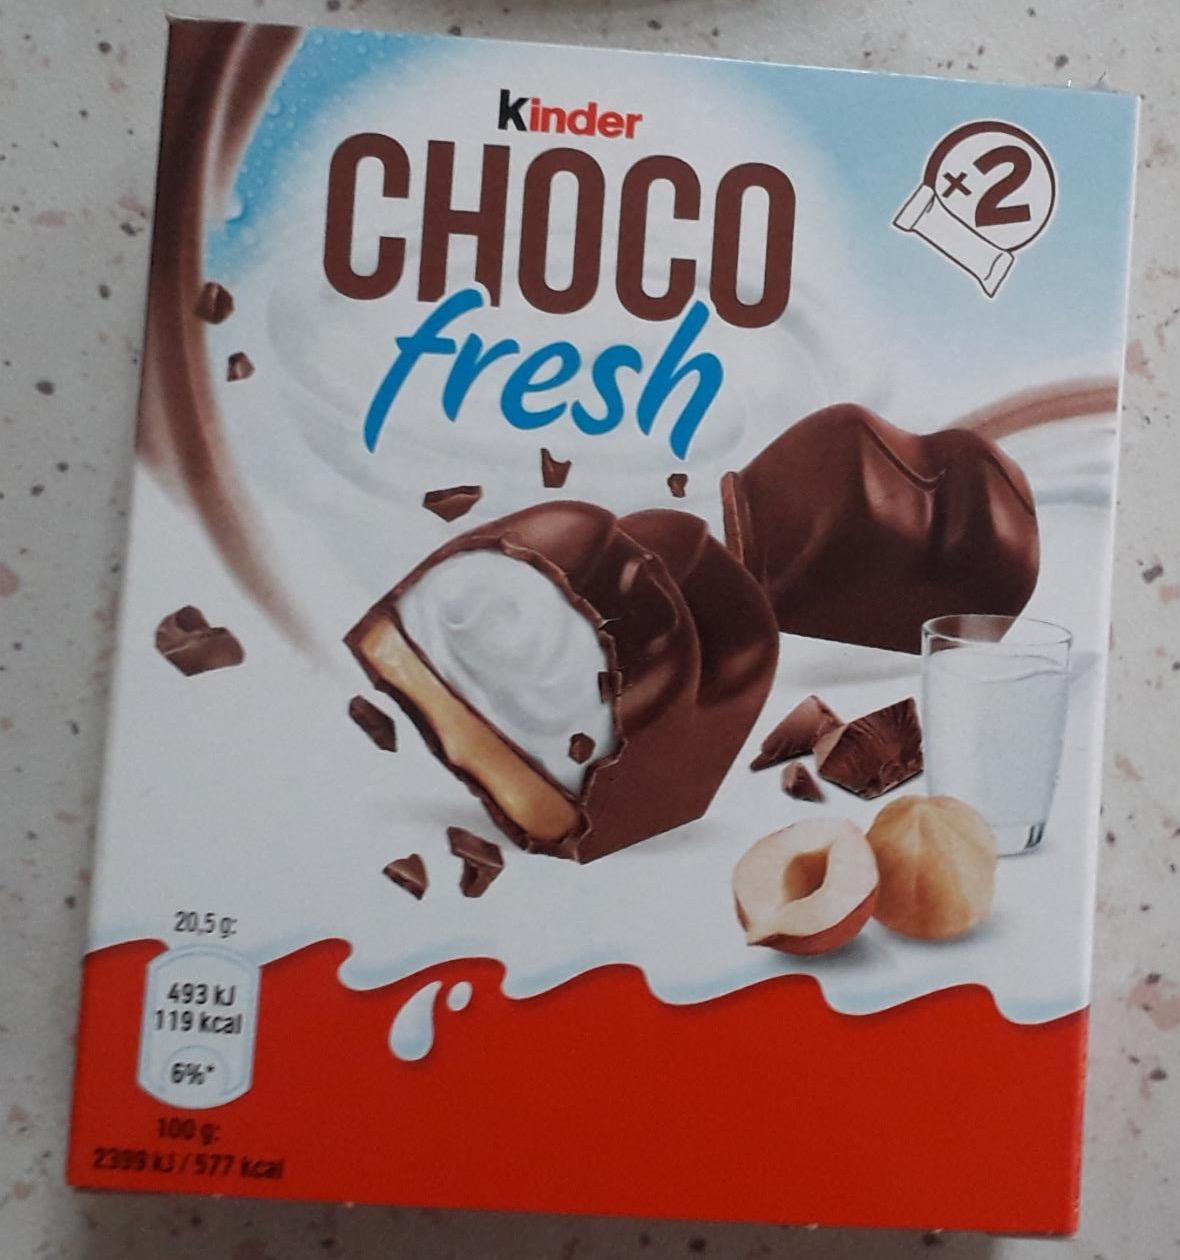 Képek - Kinder Choco fresh